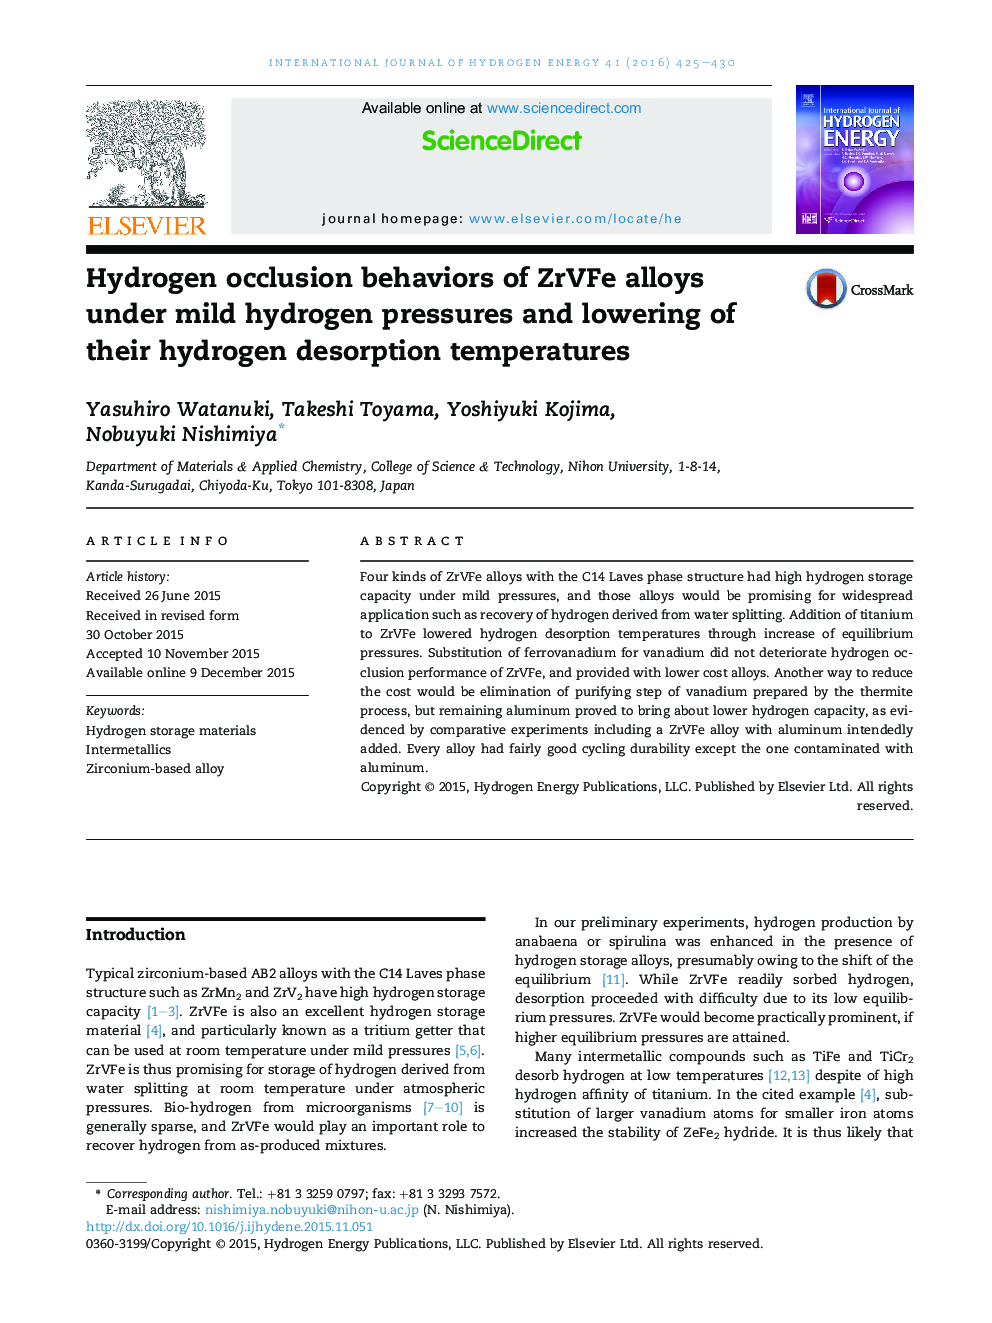 Hydrogen occlusion behaviors of ZrVFe alloys under mild hydrogen pressures and lowering of their hydrogen desorption temperatures